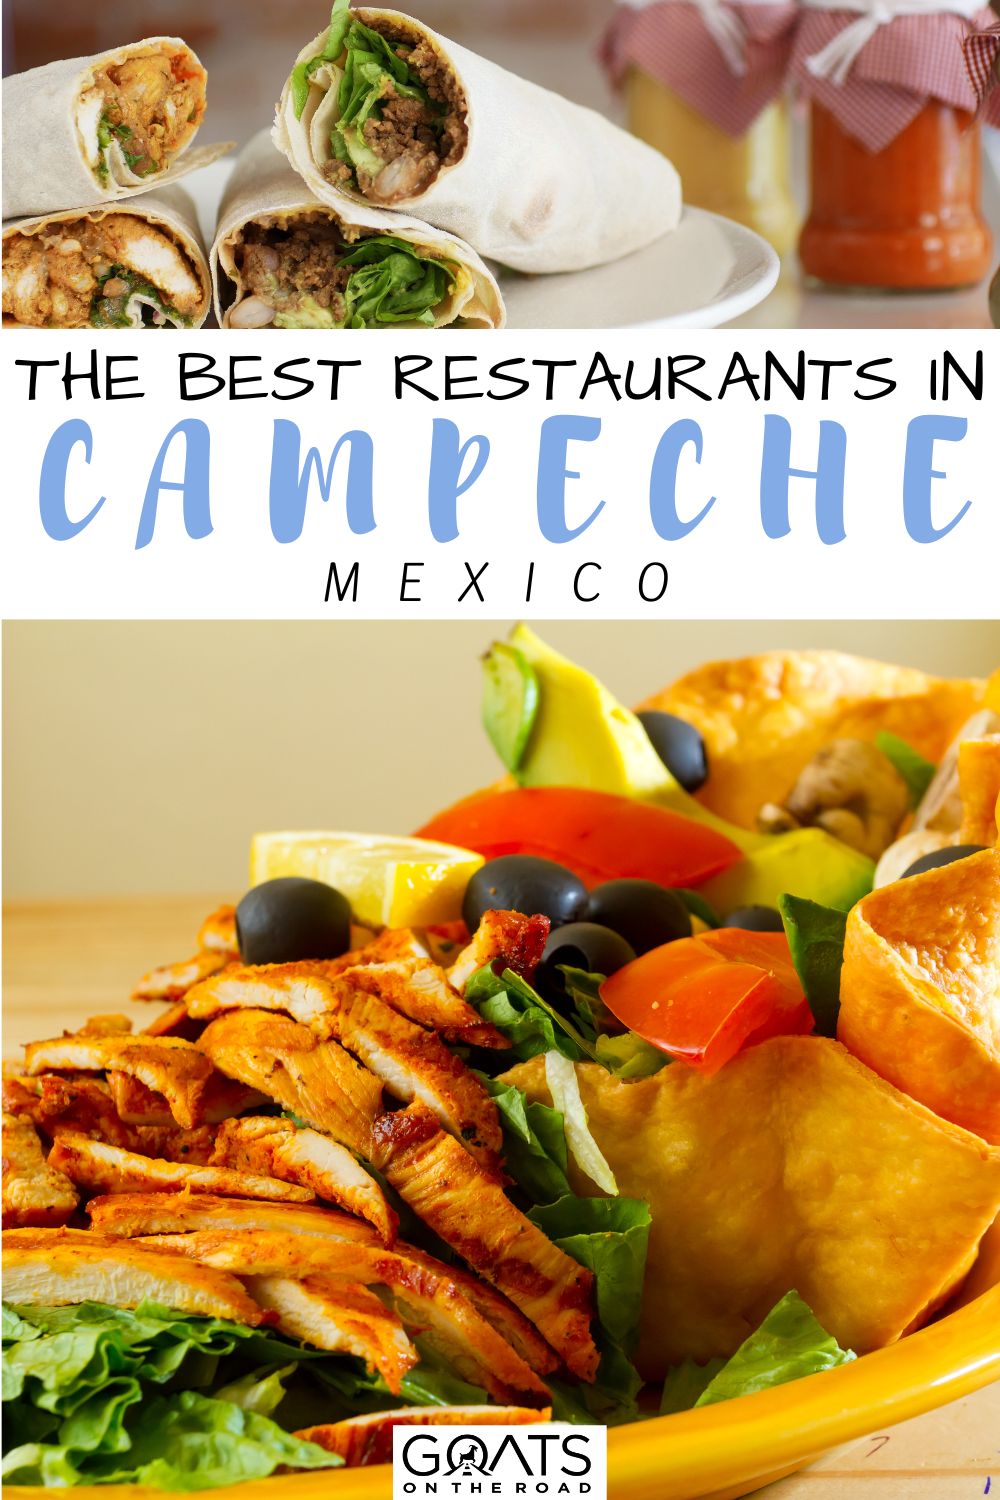 “The Best Restaurants in Campeche, Mexico